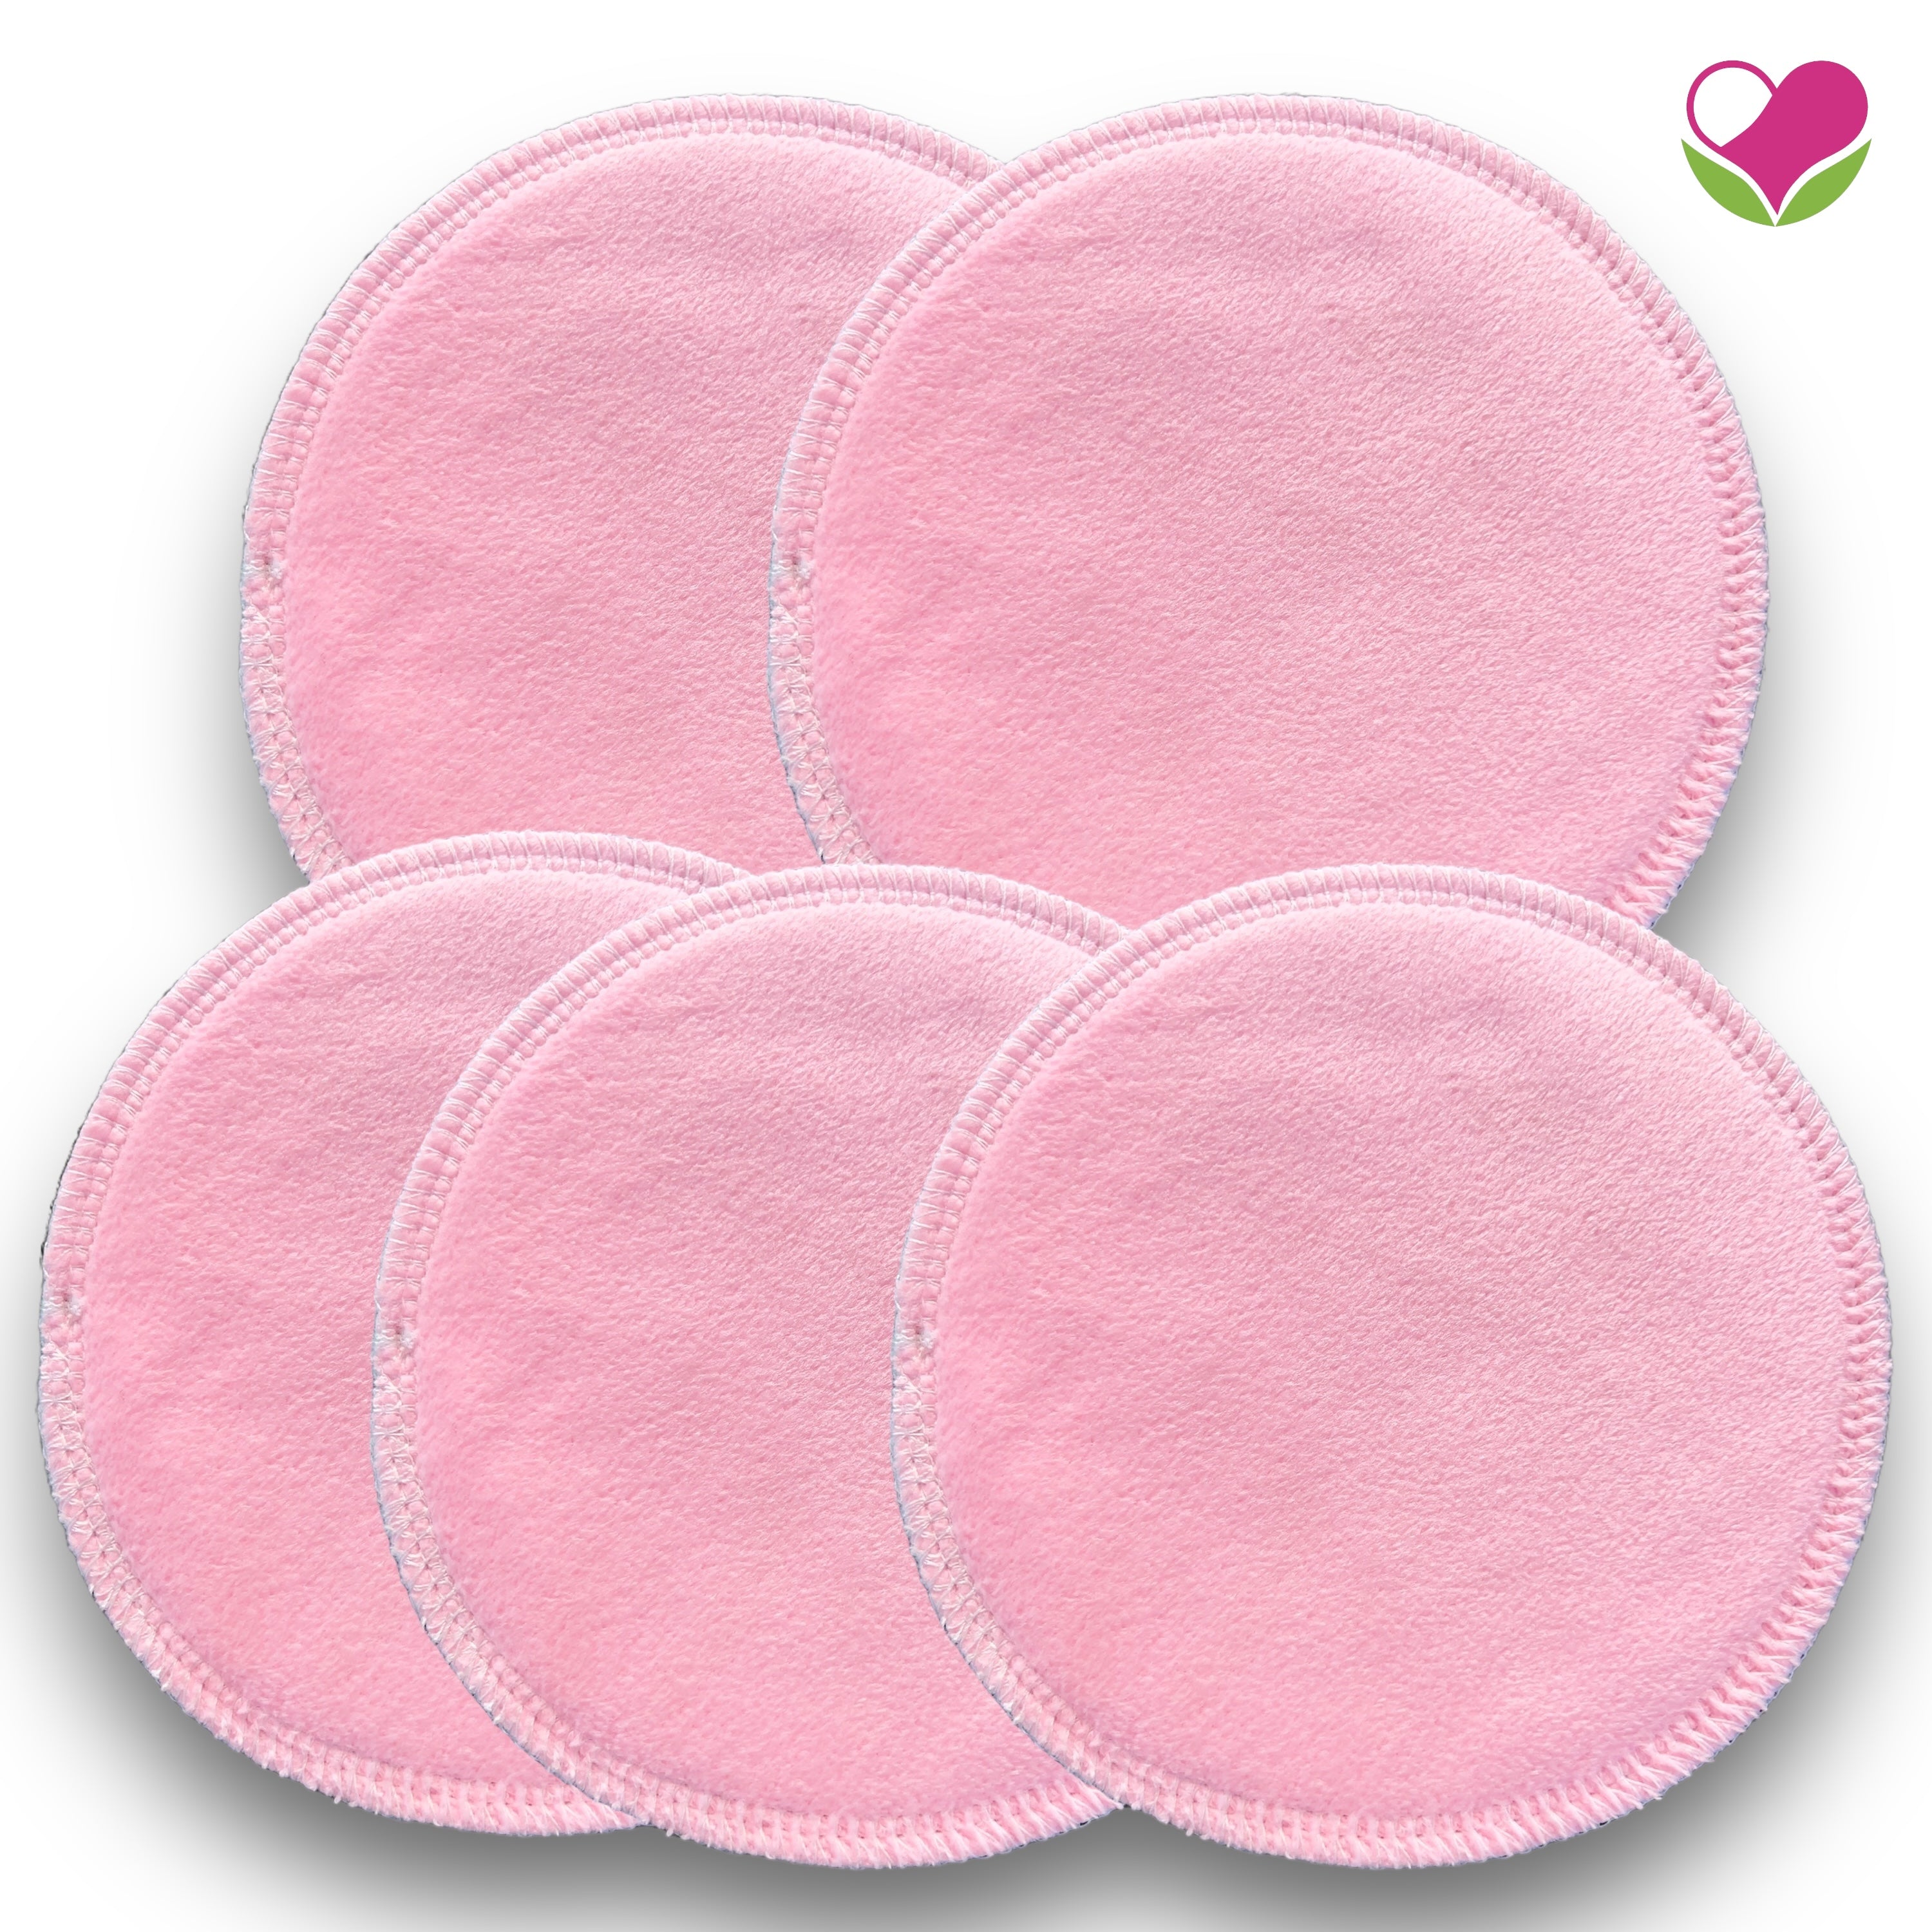 Pack 5 pads desmaquillantes doble minky fiusha/rosa 12 cms